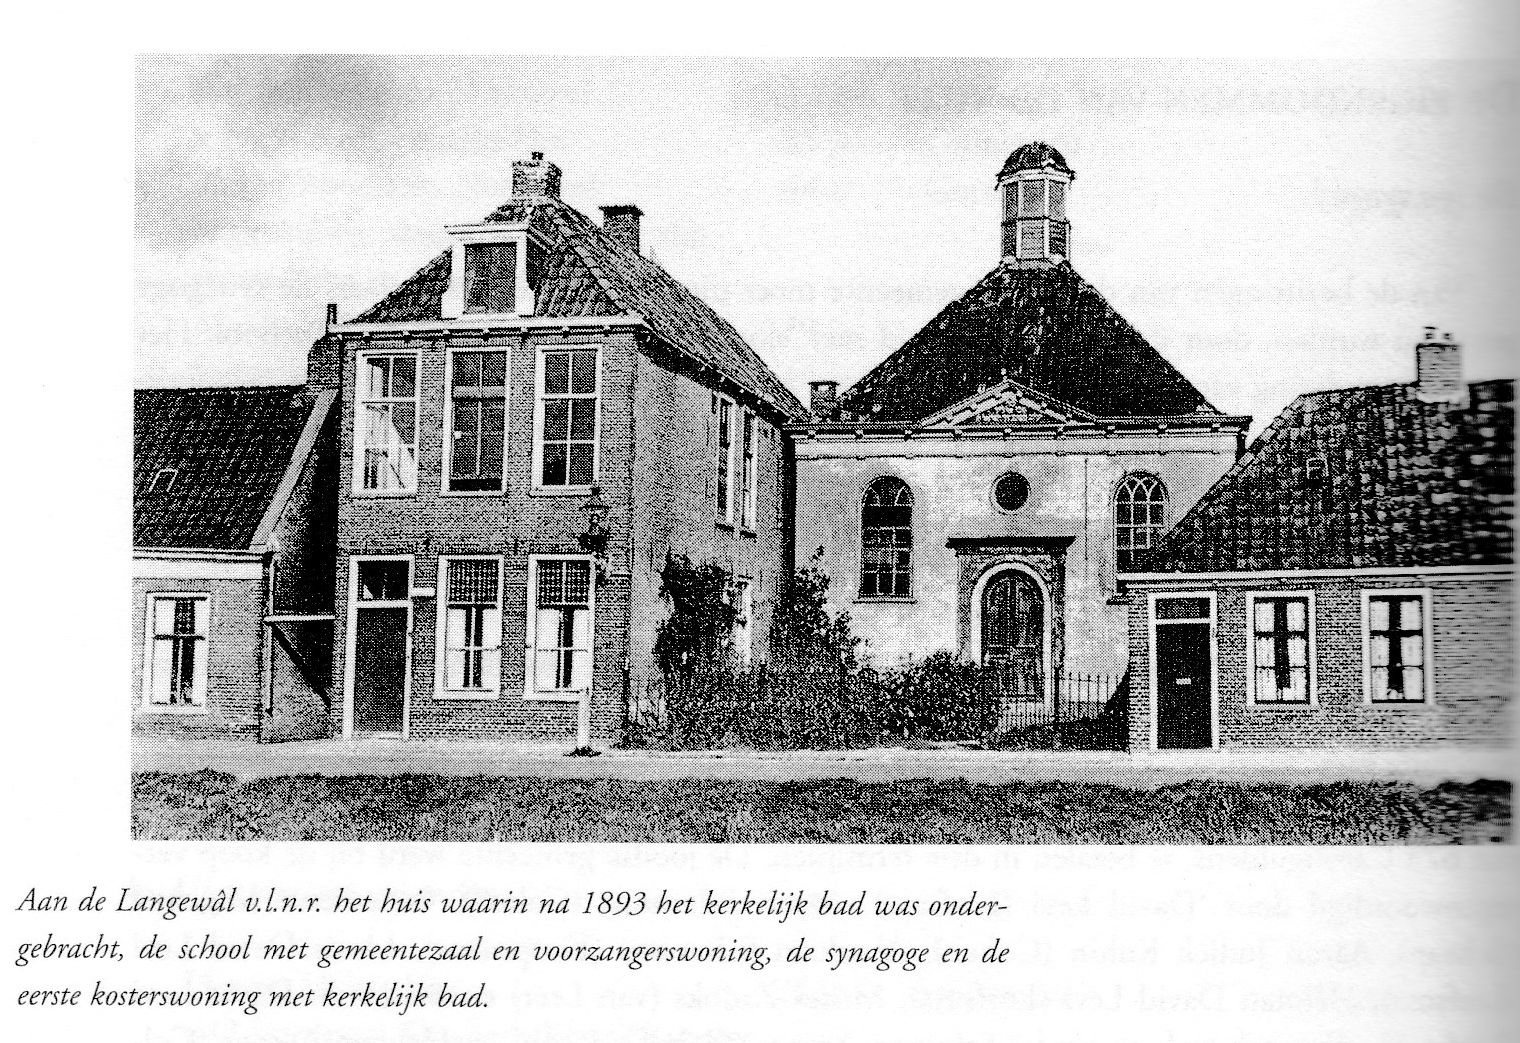 Gorredijk synagogue and adjacent houses